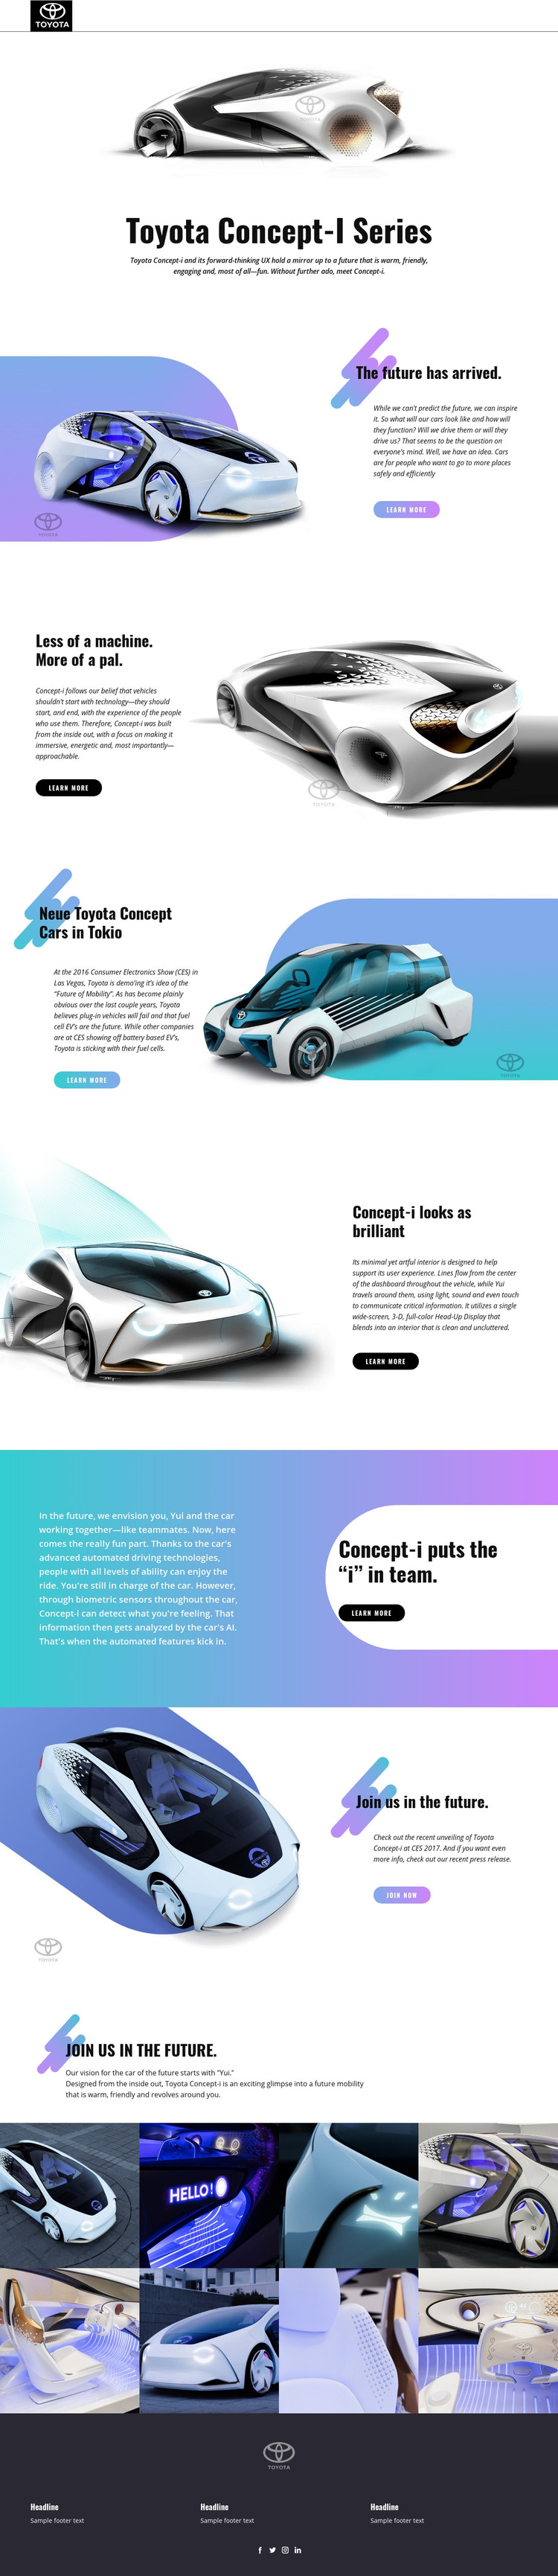 Advanced innovation cars Homepage Design